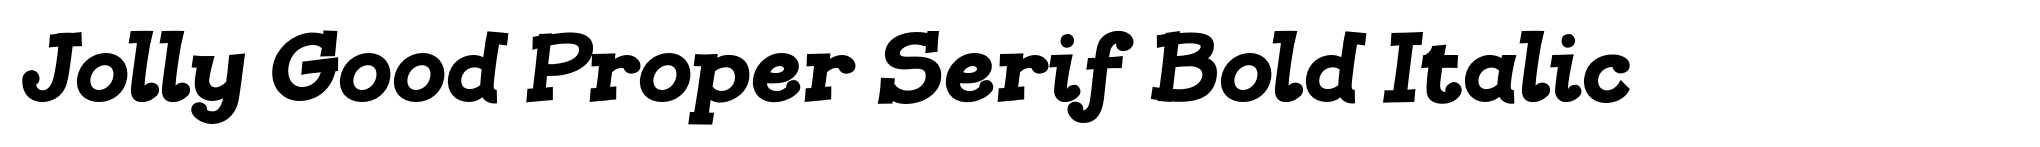 Jolly Good Proper Serif Bold Italic image